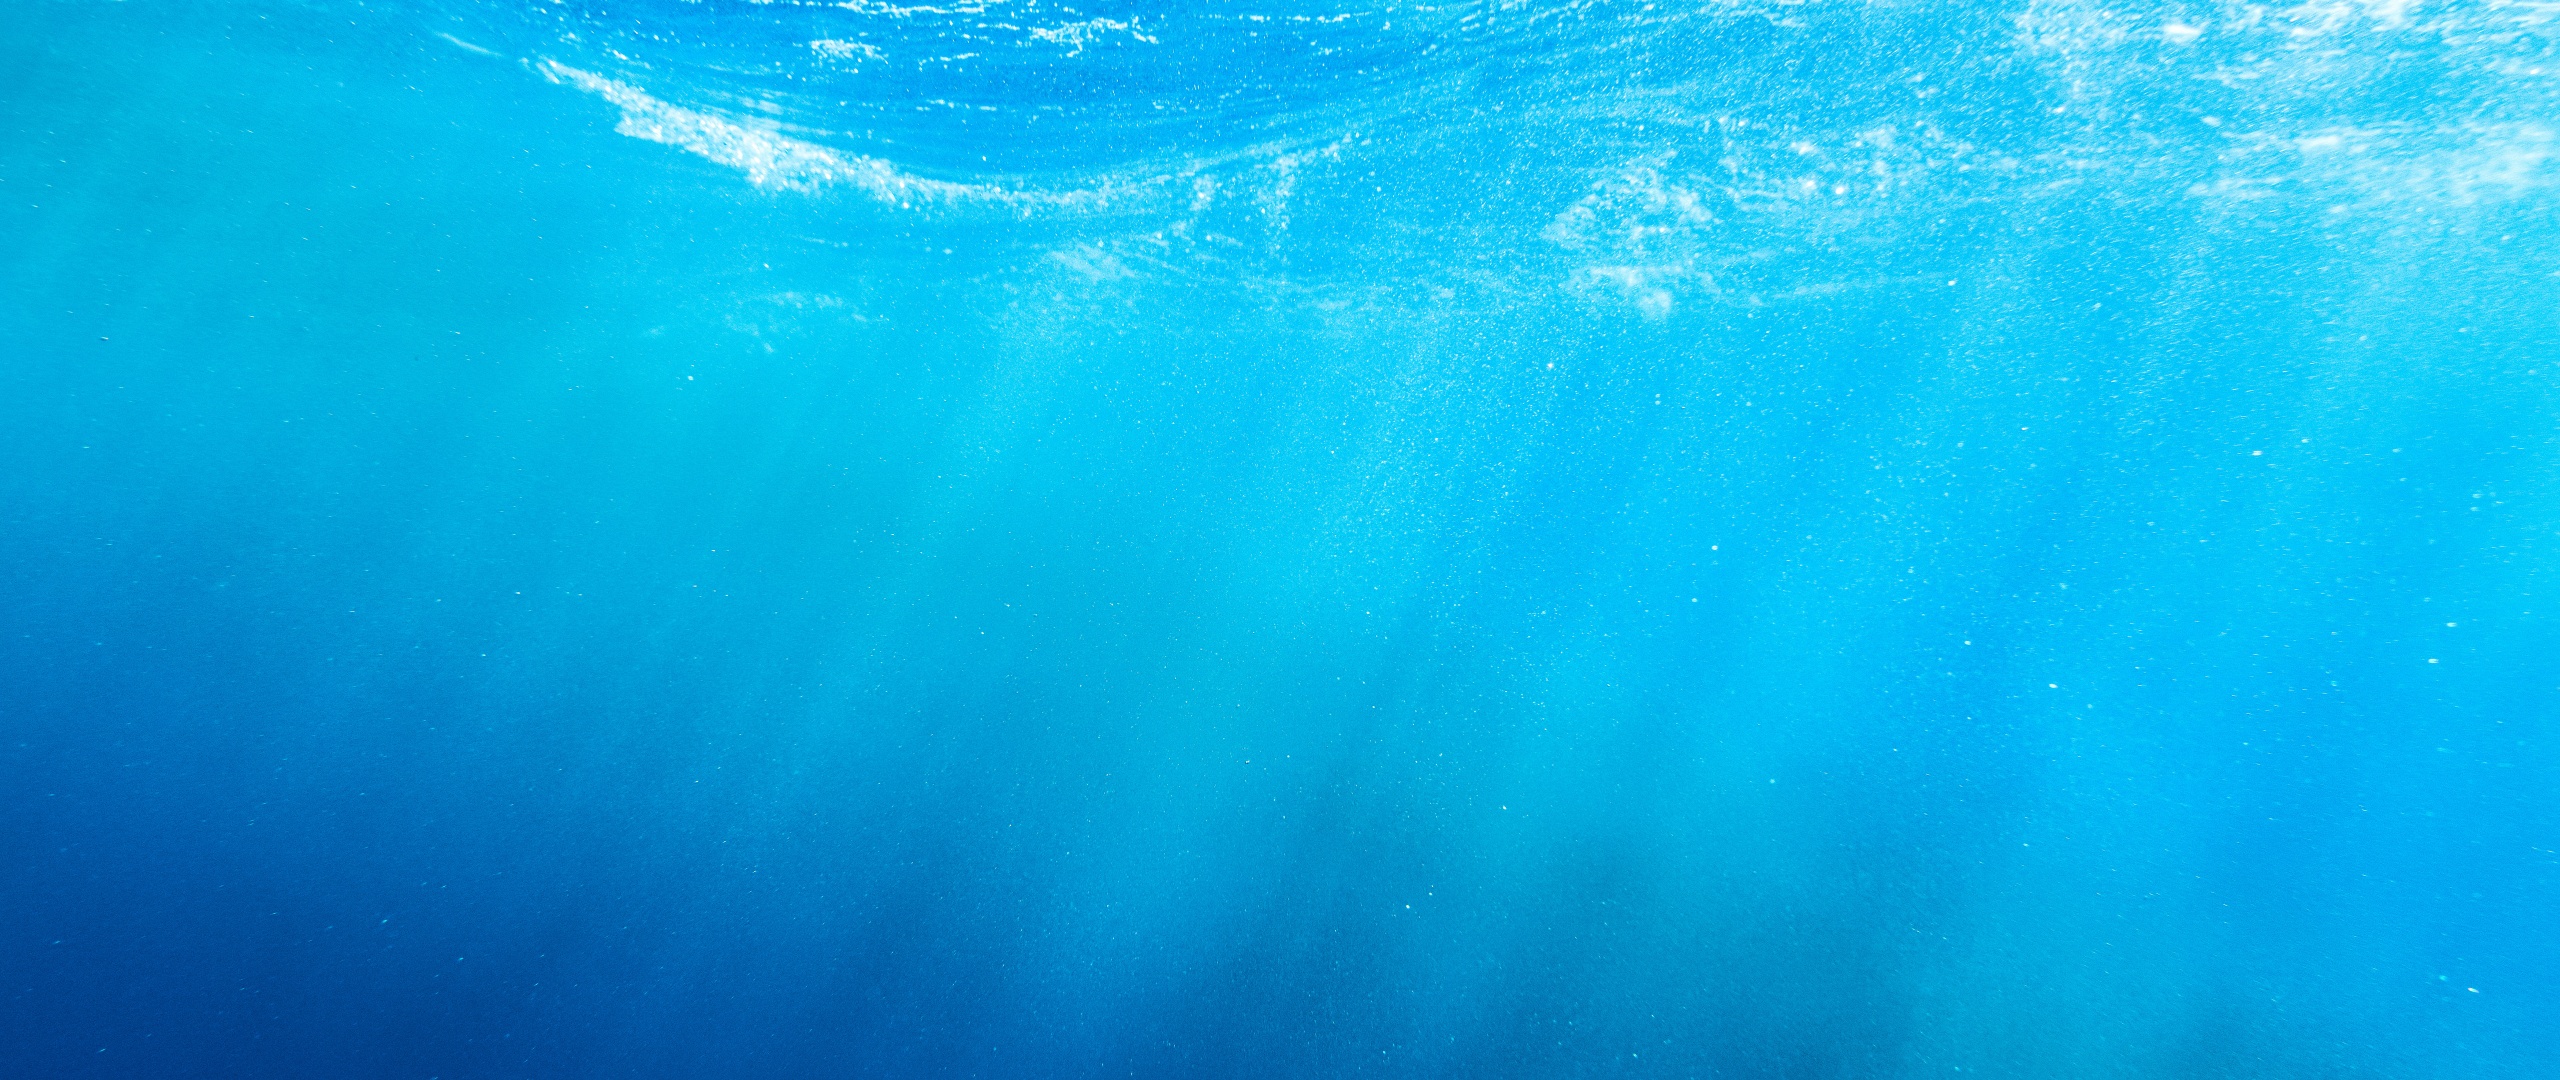 Wallpaper Ocean, 5k, 4k wallpaper, 8k, Sea, nature, underwater, water, sun,  sky, blue, rays, OS #386